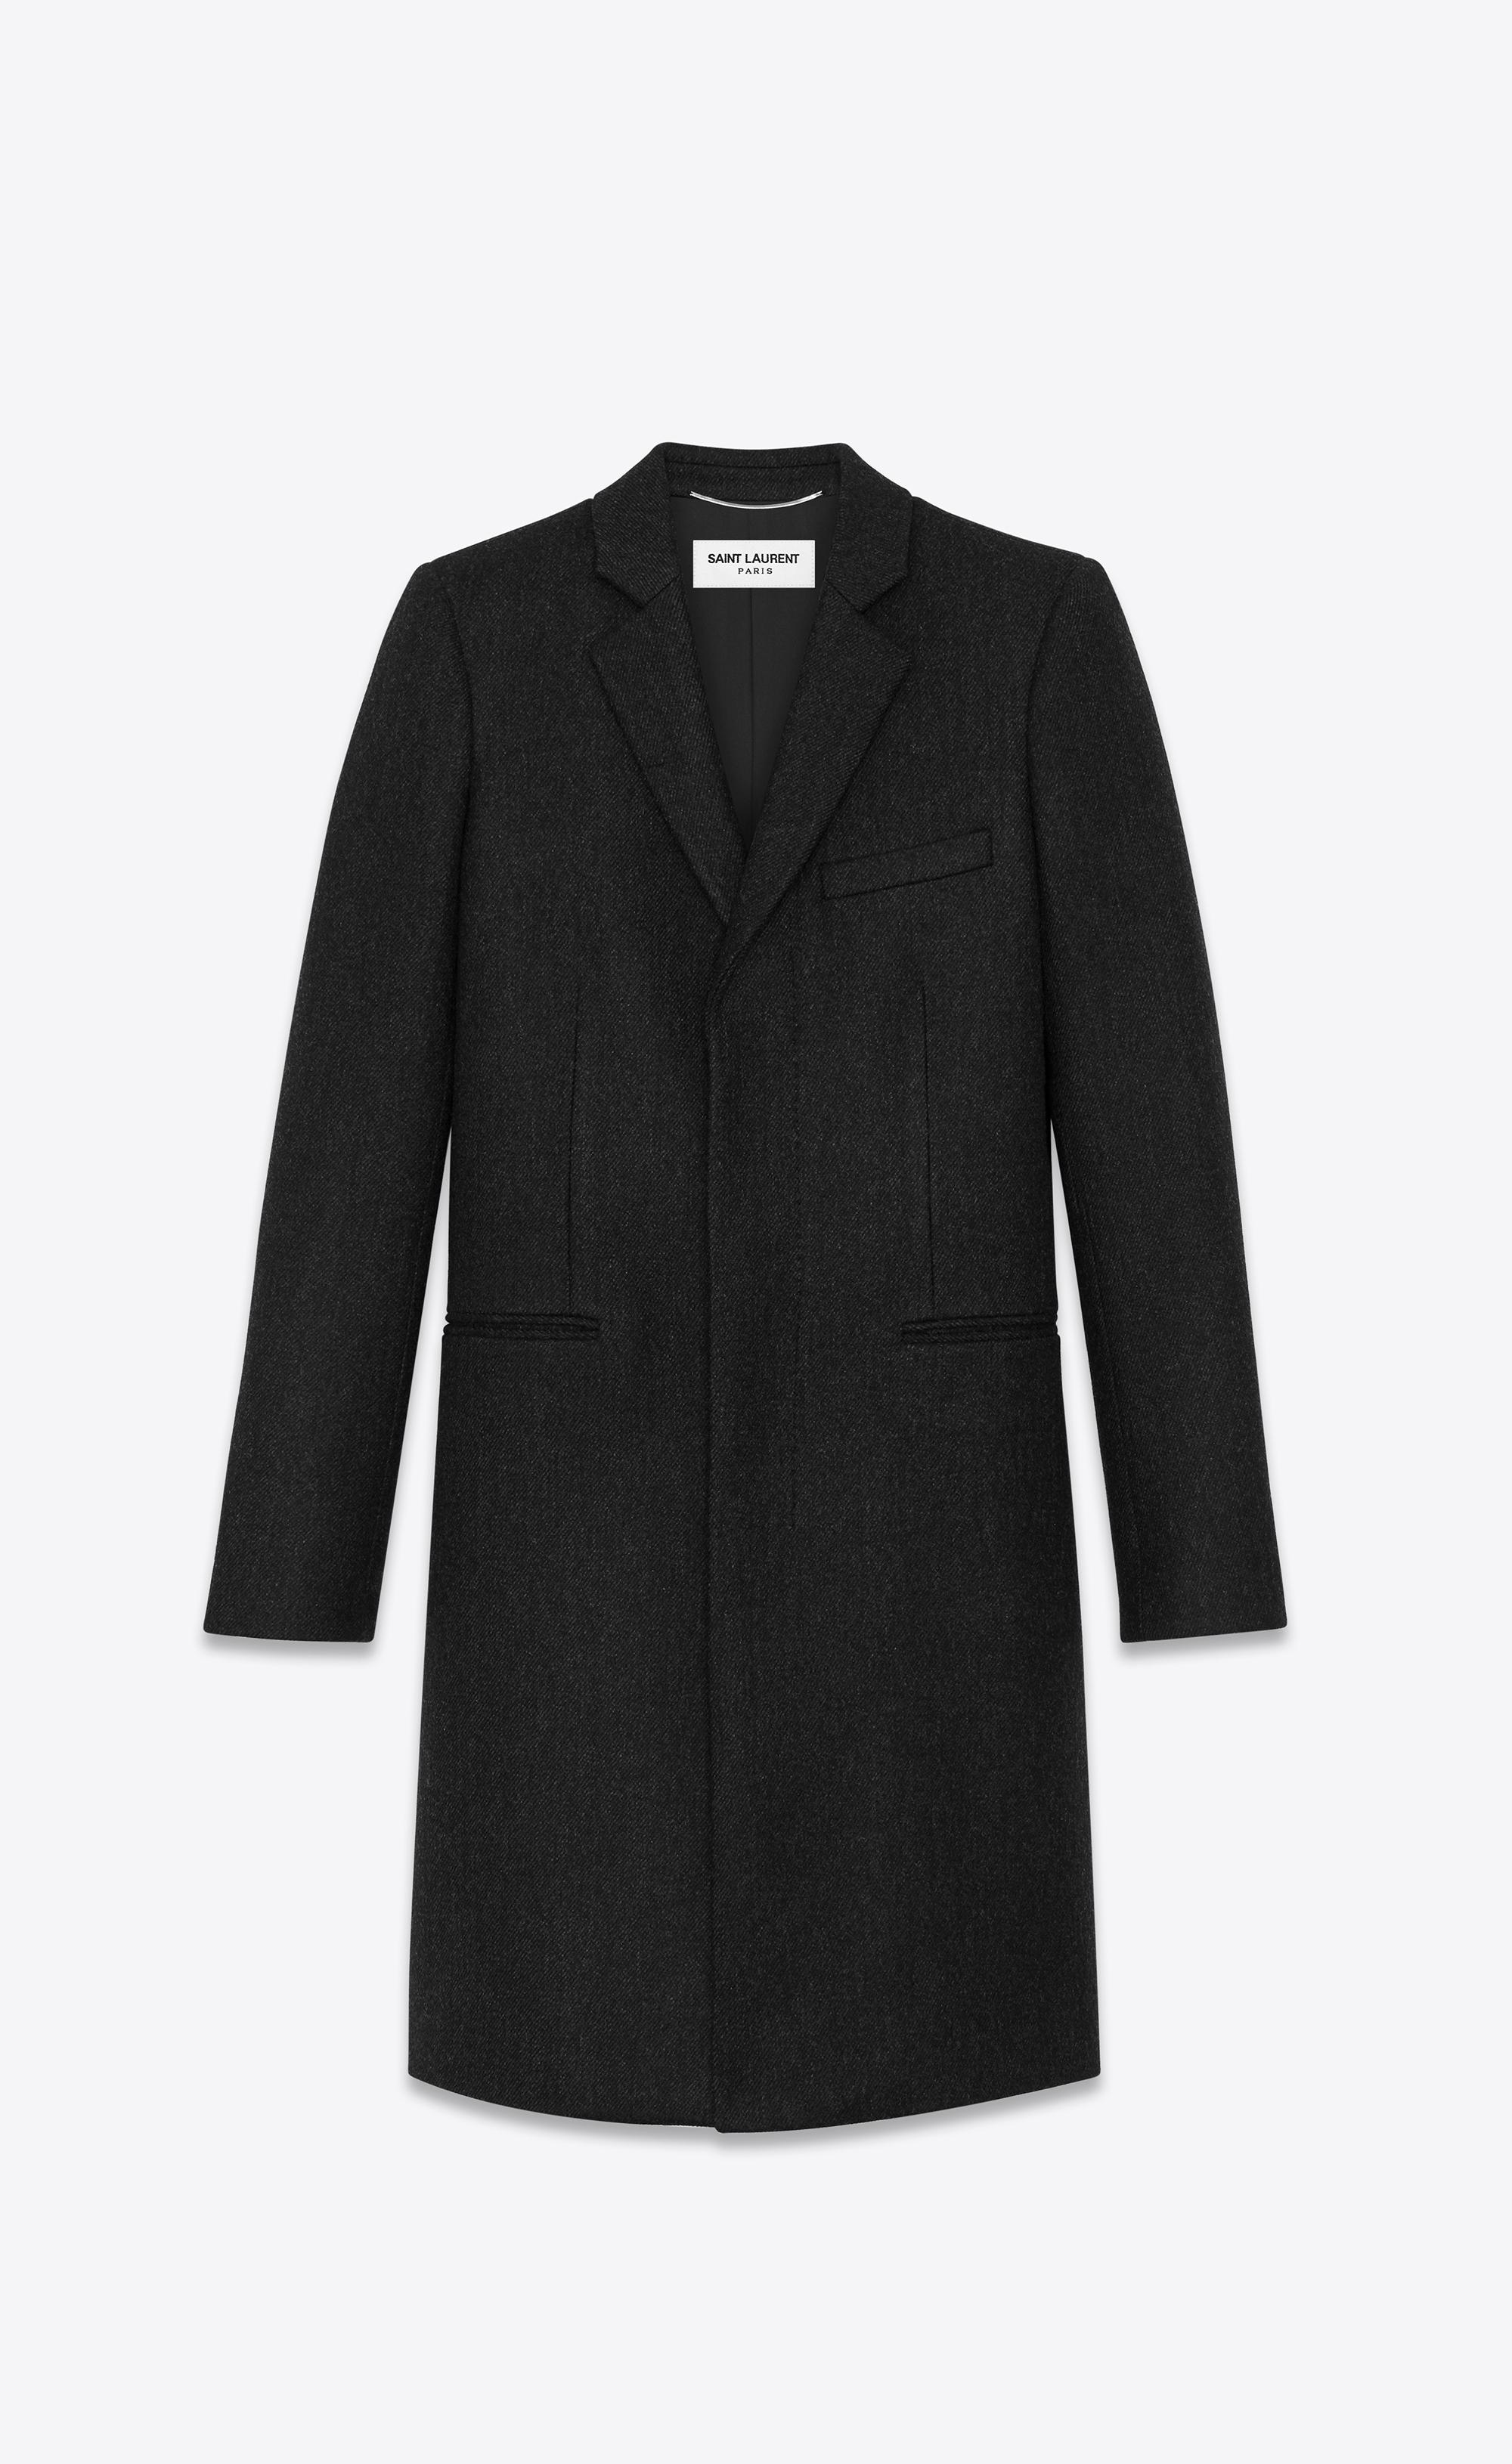 Saint Laurent Chesterfield Wool Coat in Black for Men - Lyst